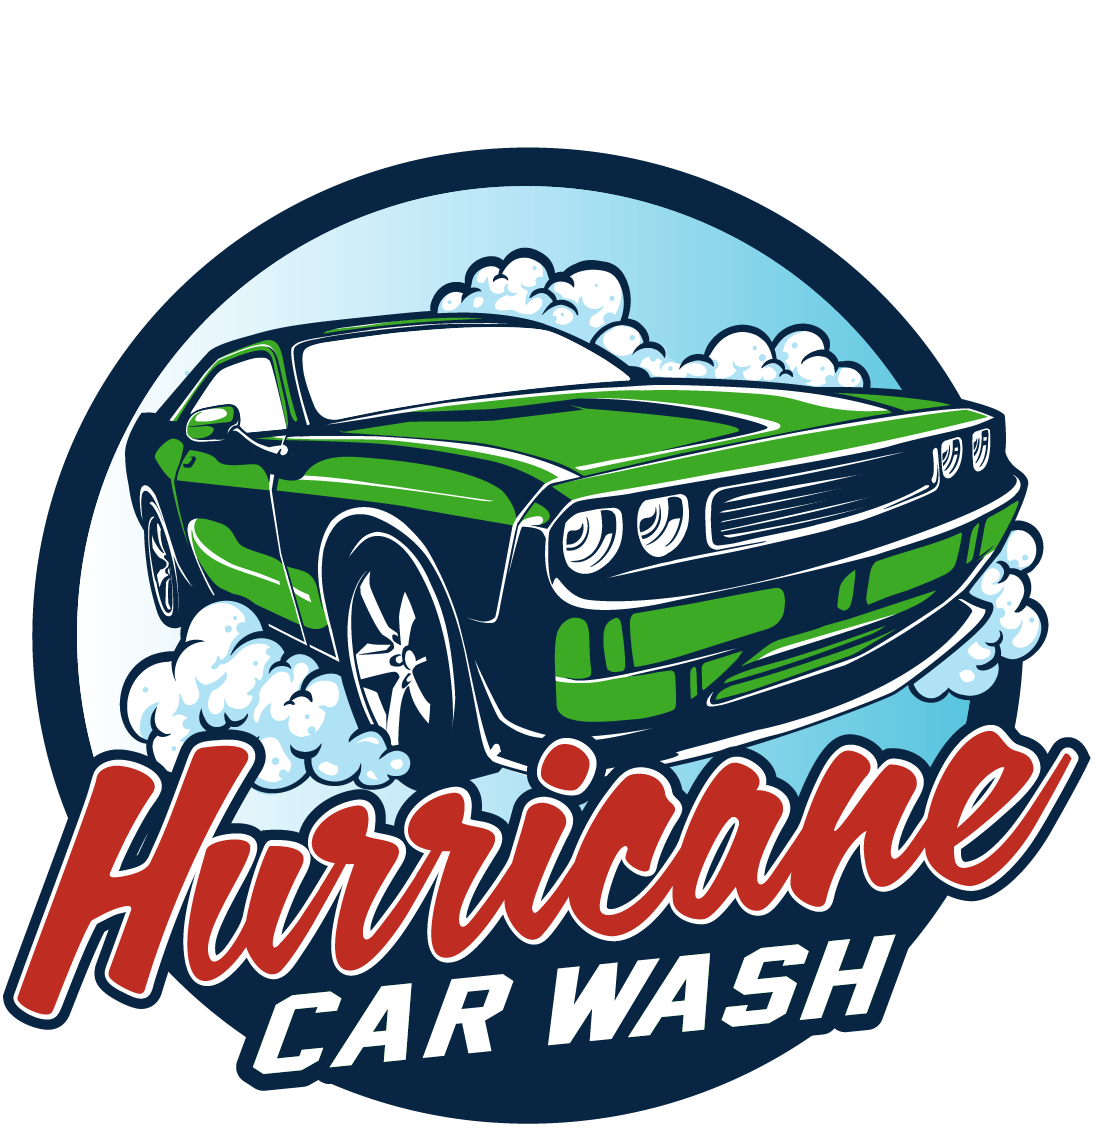 Hurricane Car Wash in Riverside, New York